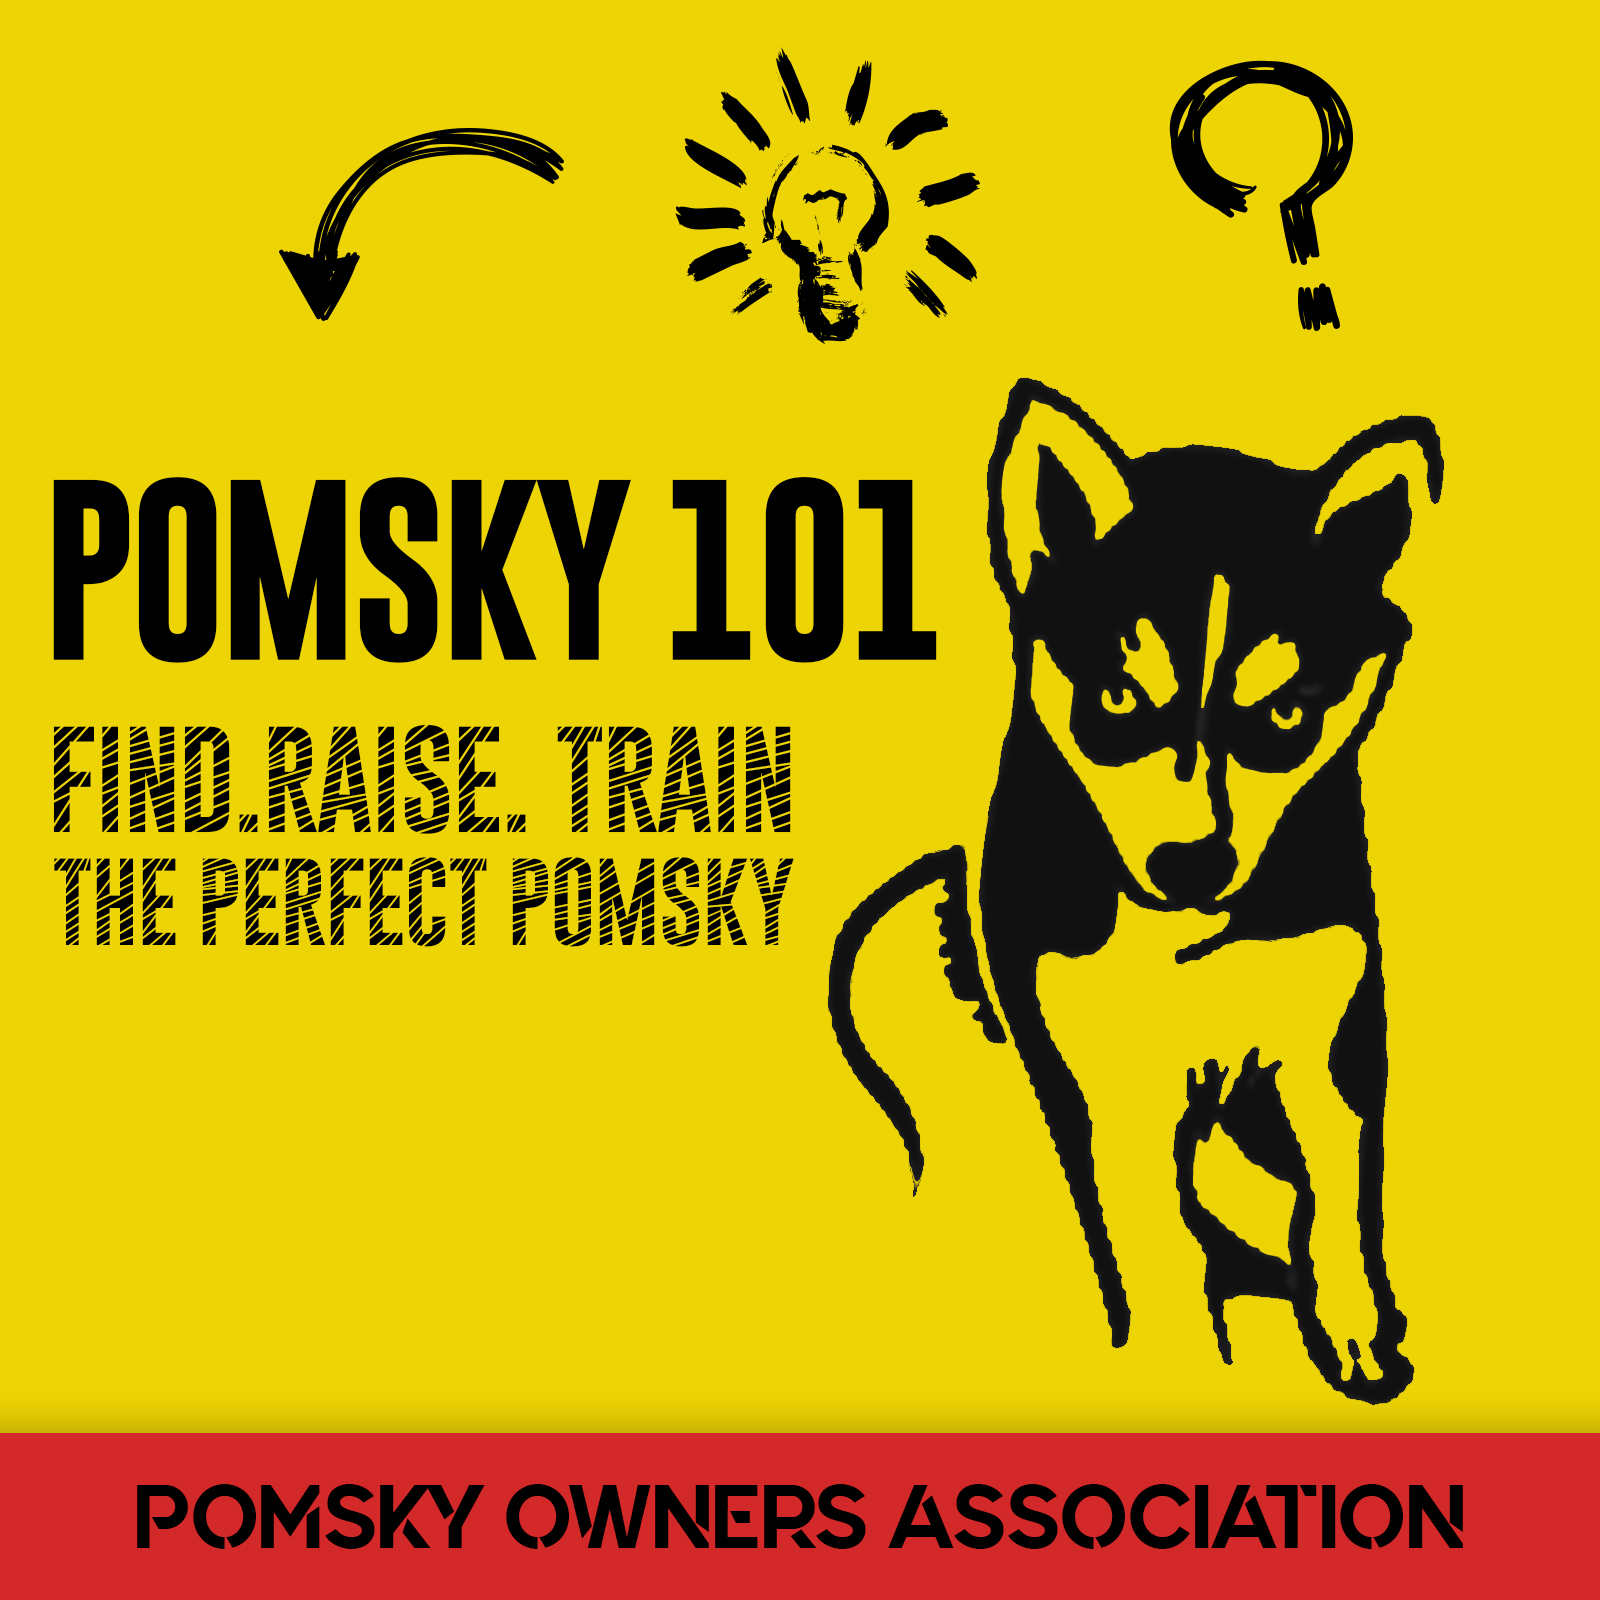 005 – Pomsky Owner: The Best Pomsky Training Technique